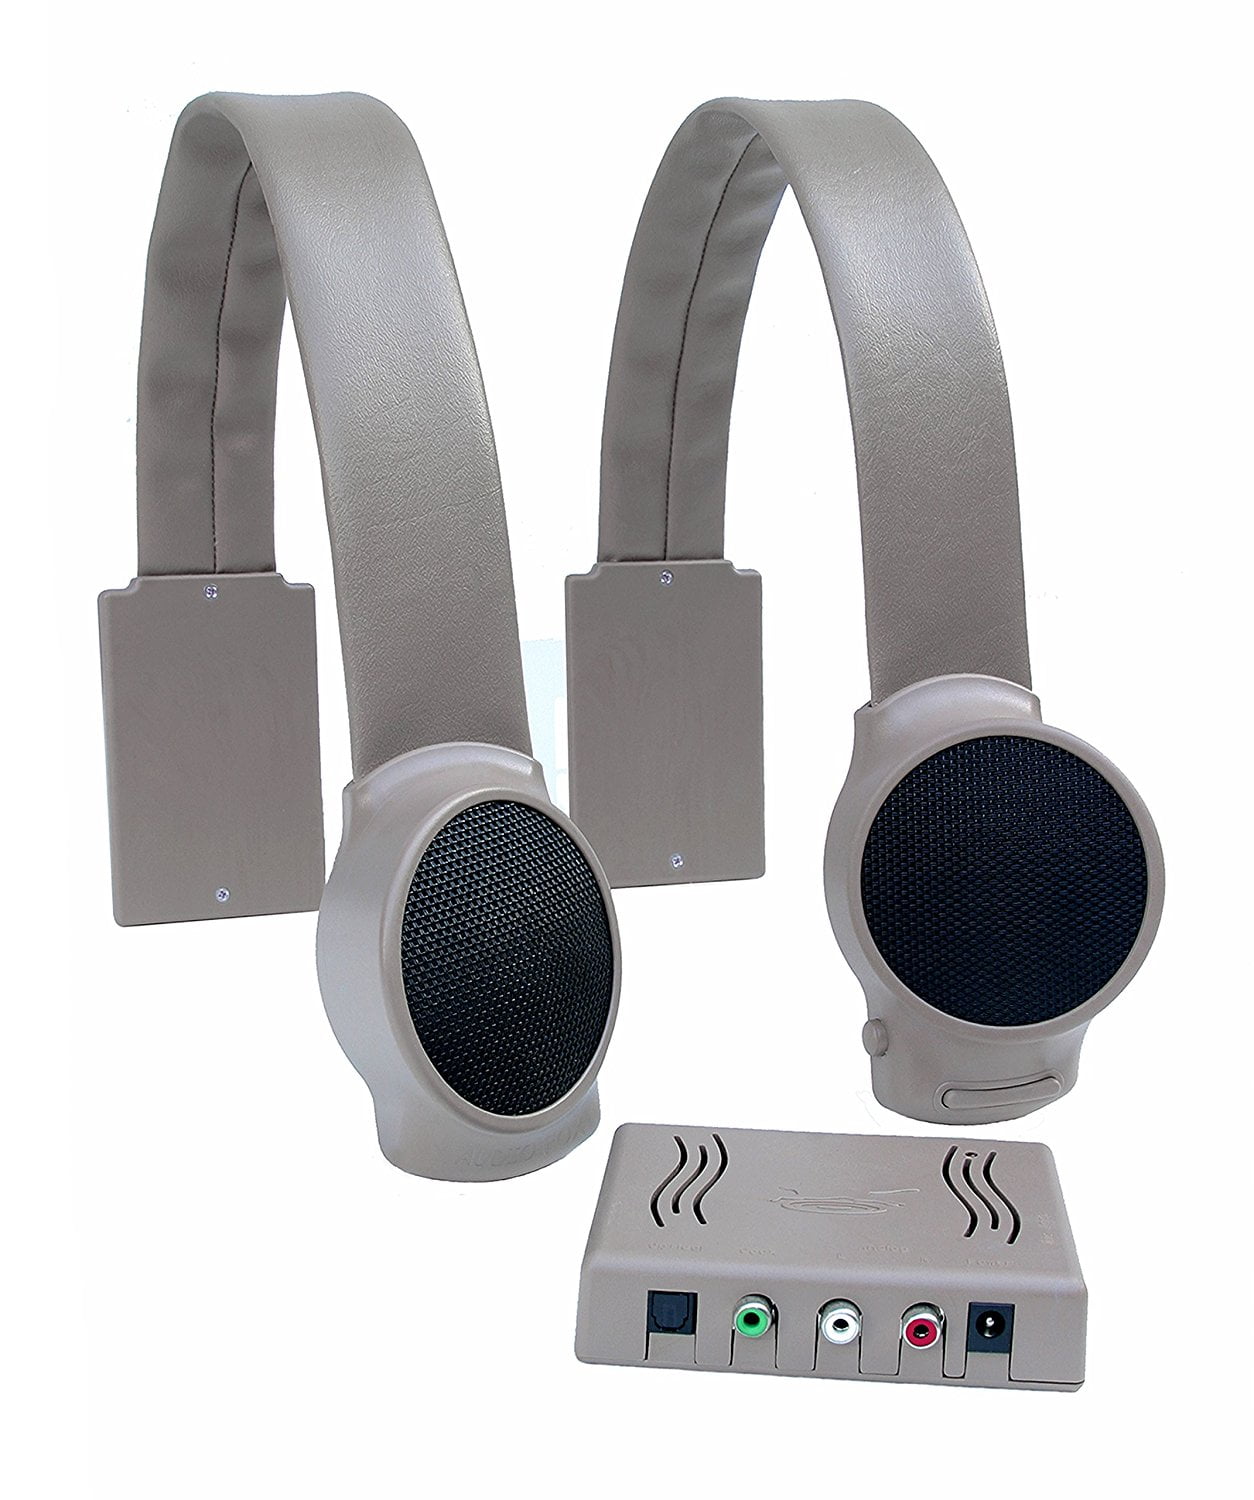 Audio Fox Wireless TV Speakers - Gray - Walmart.com - Walmart.com